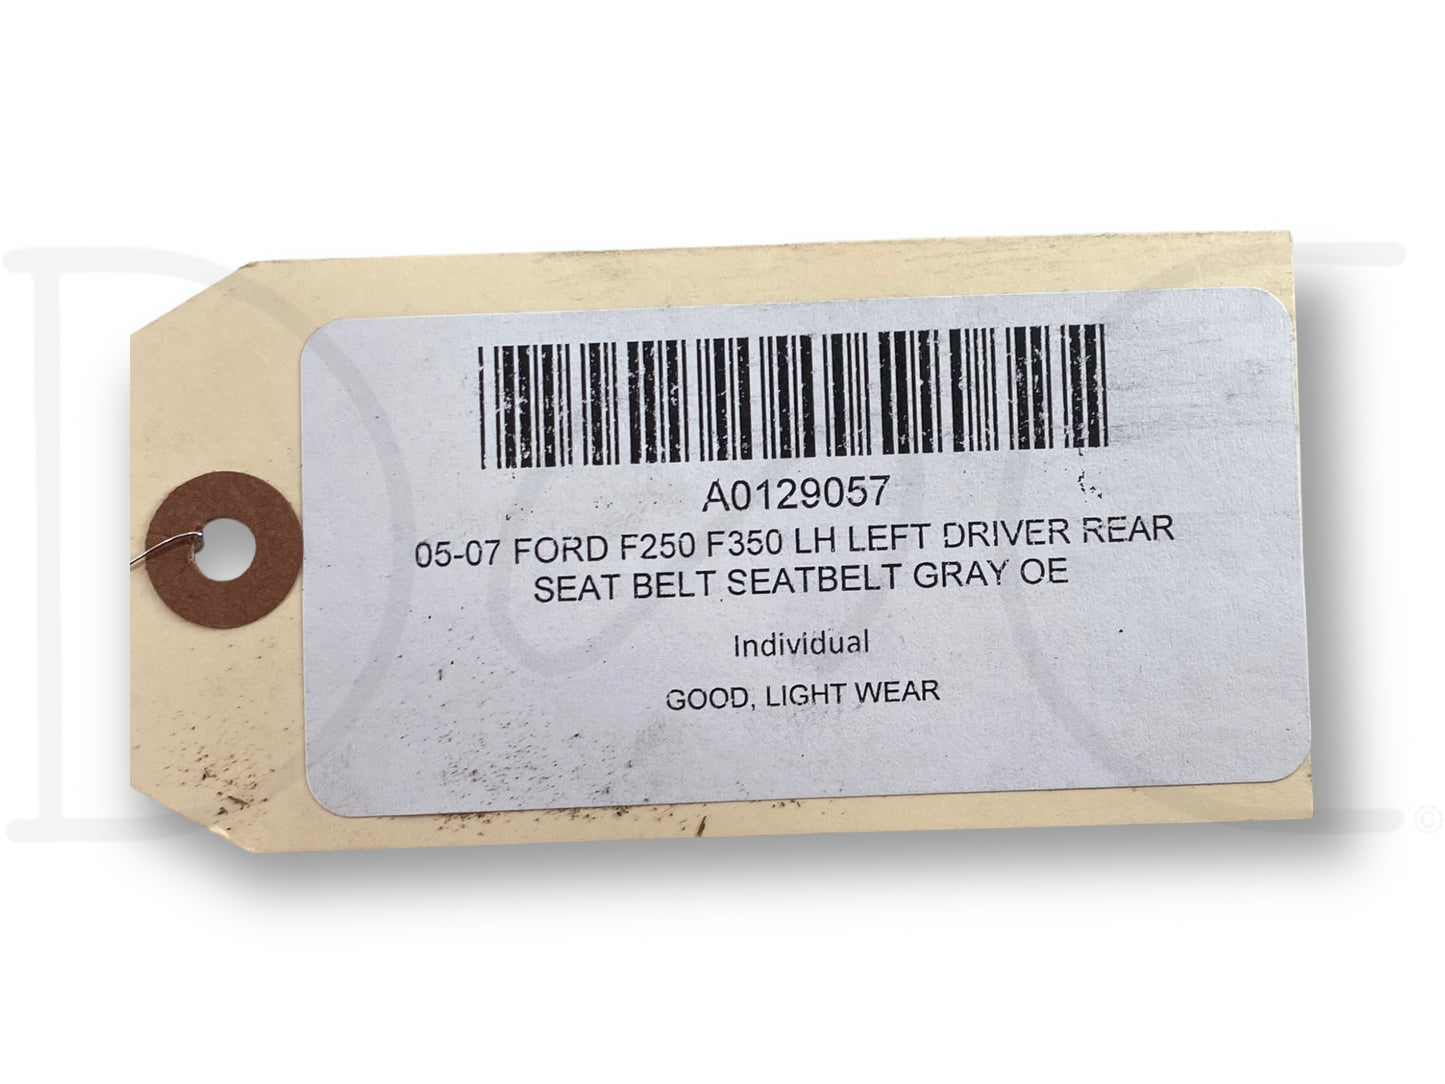 05-07 Ford F250 F350 LH Left Driver Rear Seat Belt Seatbelt Gray OE